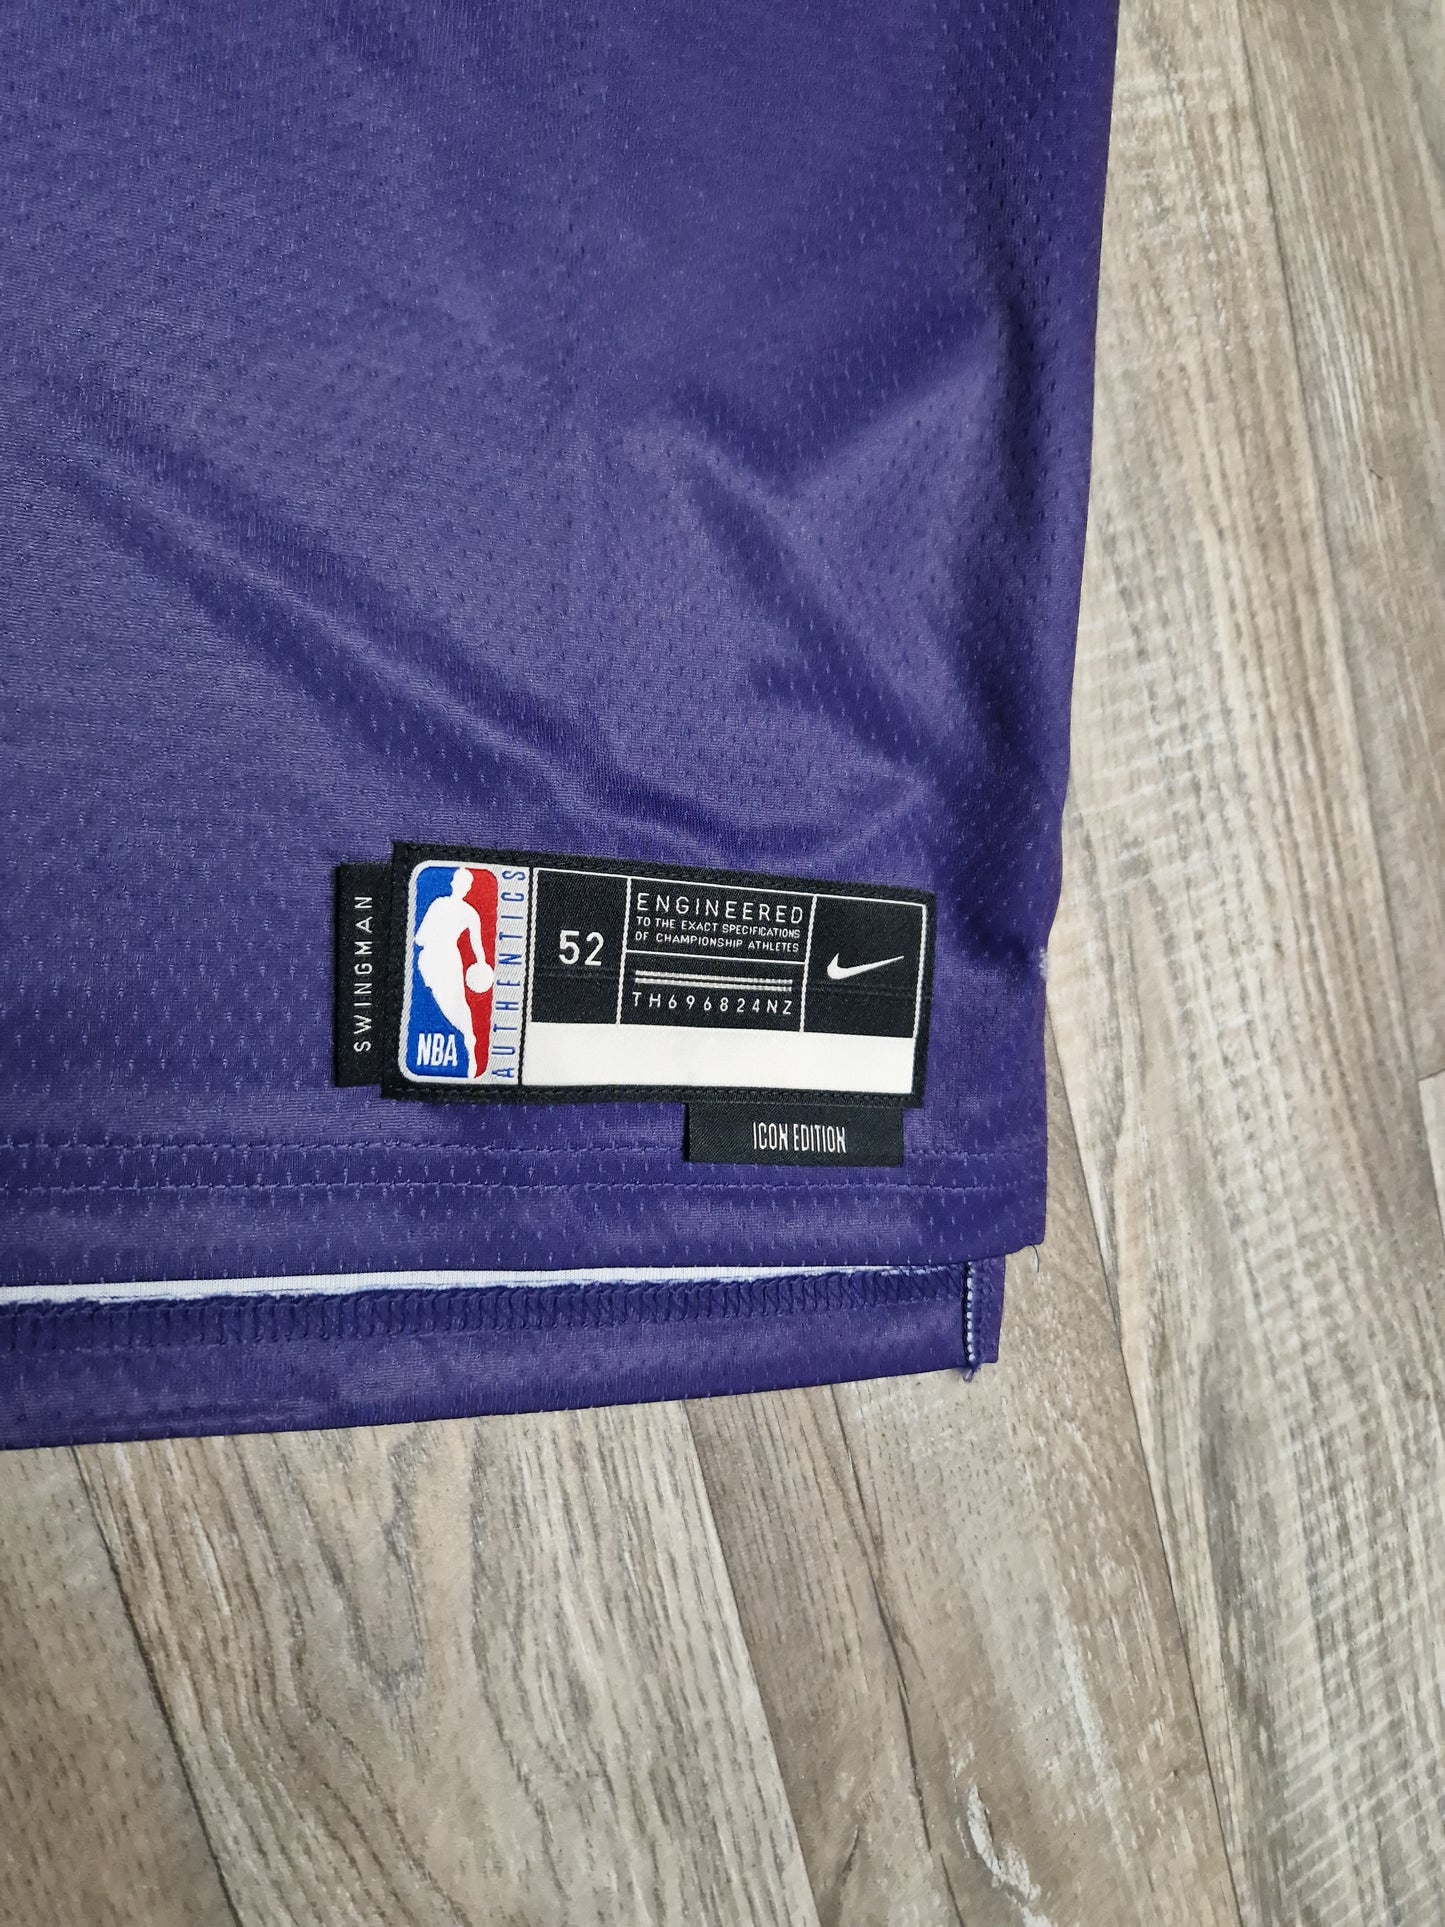 Kevin Durant Phoenix Suns Jersey Size XL